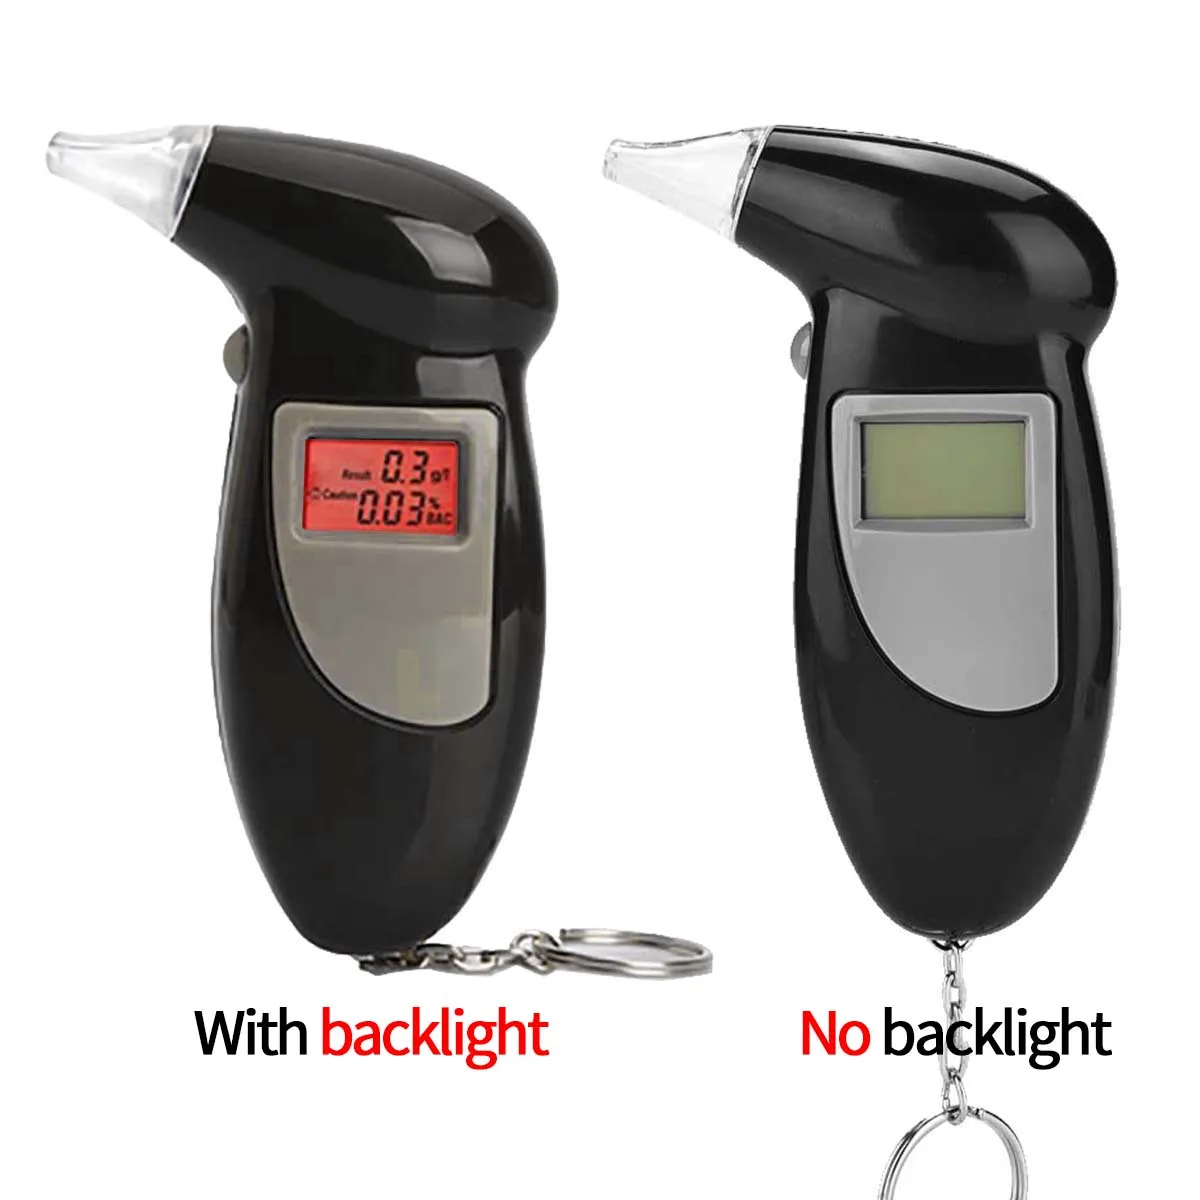 

2021 new Handheld Backlight Digital Alcohol LCD Detector Tester Digital Alcohol Breath Tester Breathalyzer Analyzer